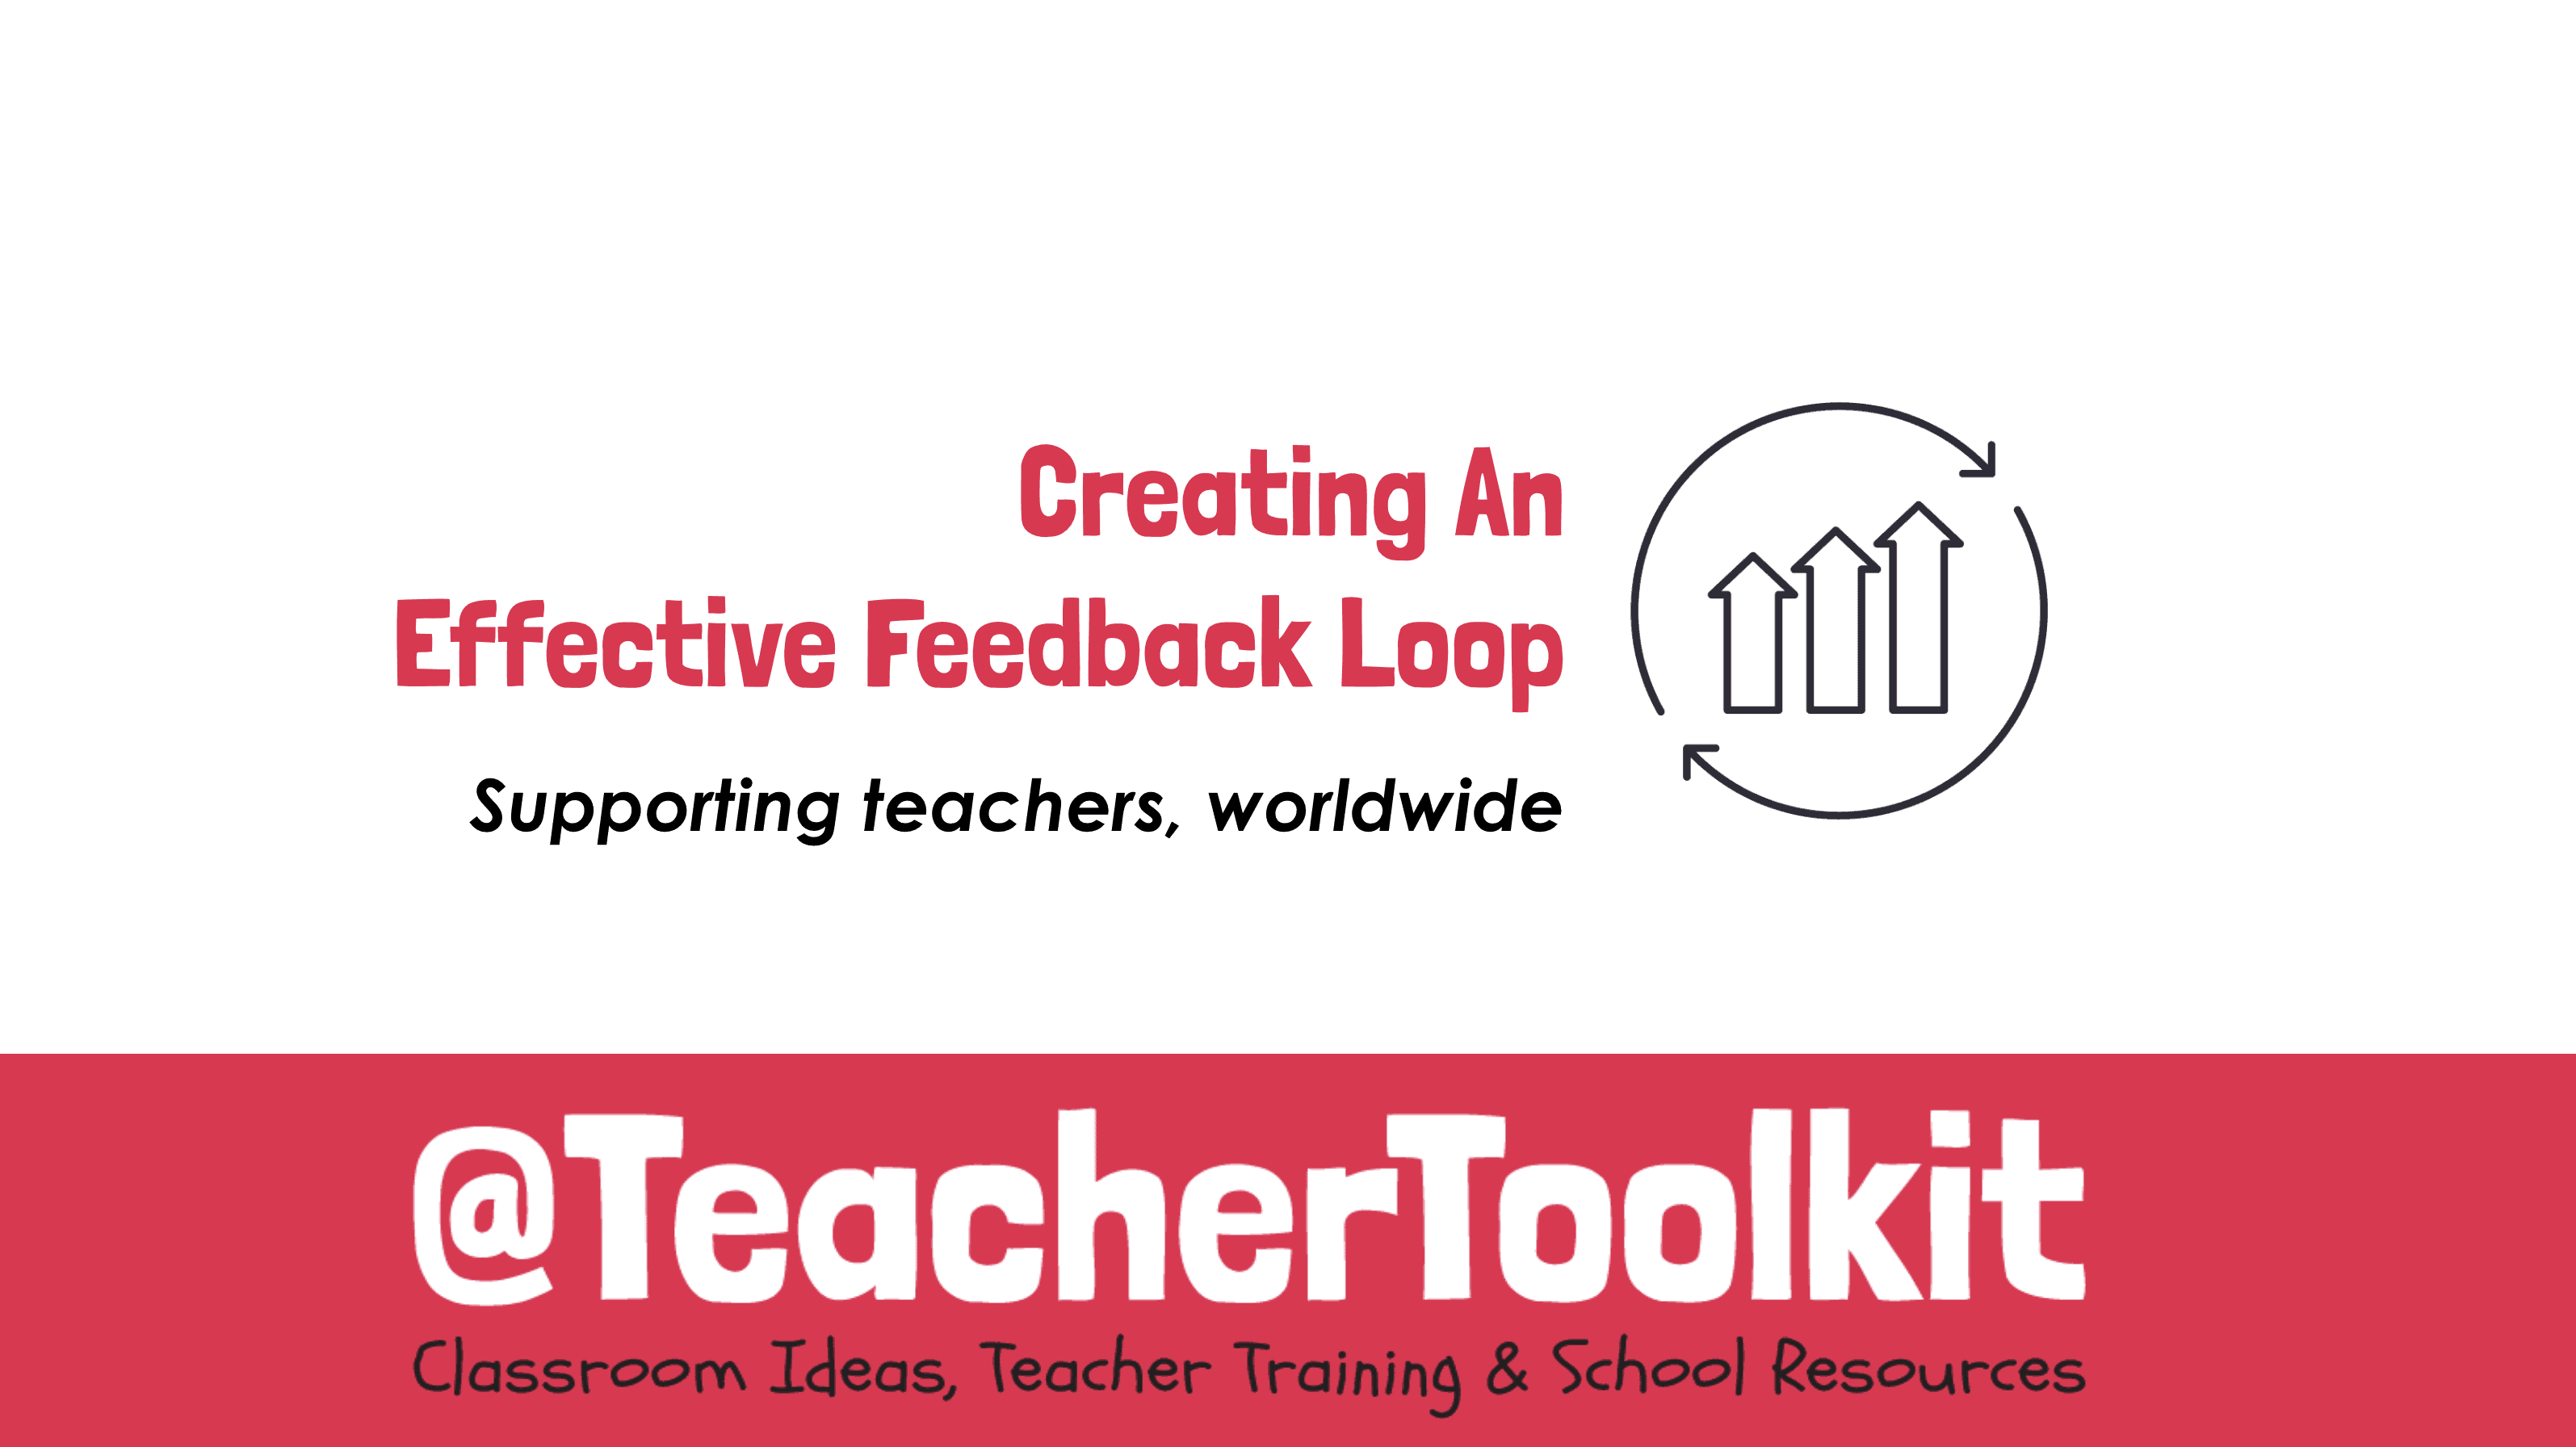 Supporting teachers. Effective feedback. Provide feedback. 7 Principles of good feedback.